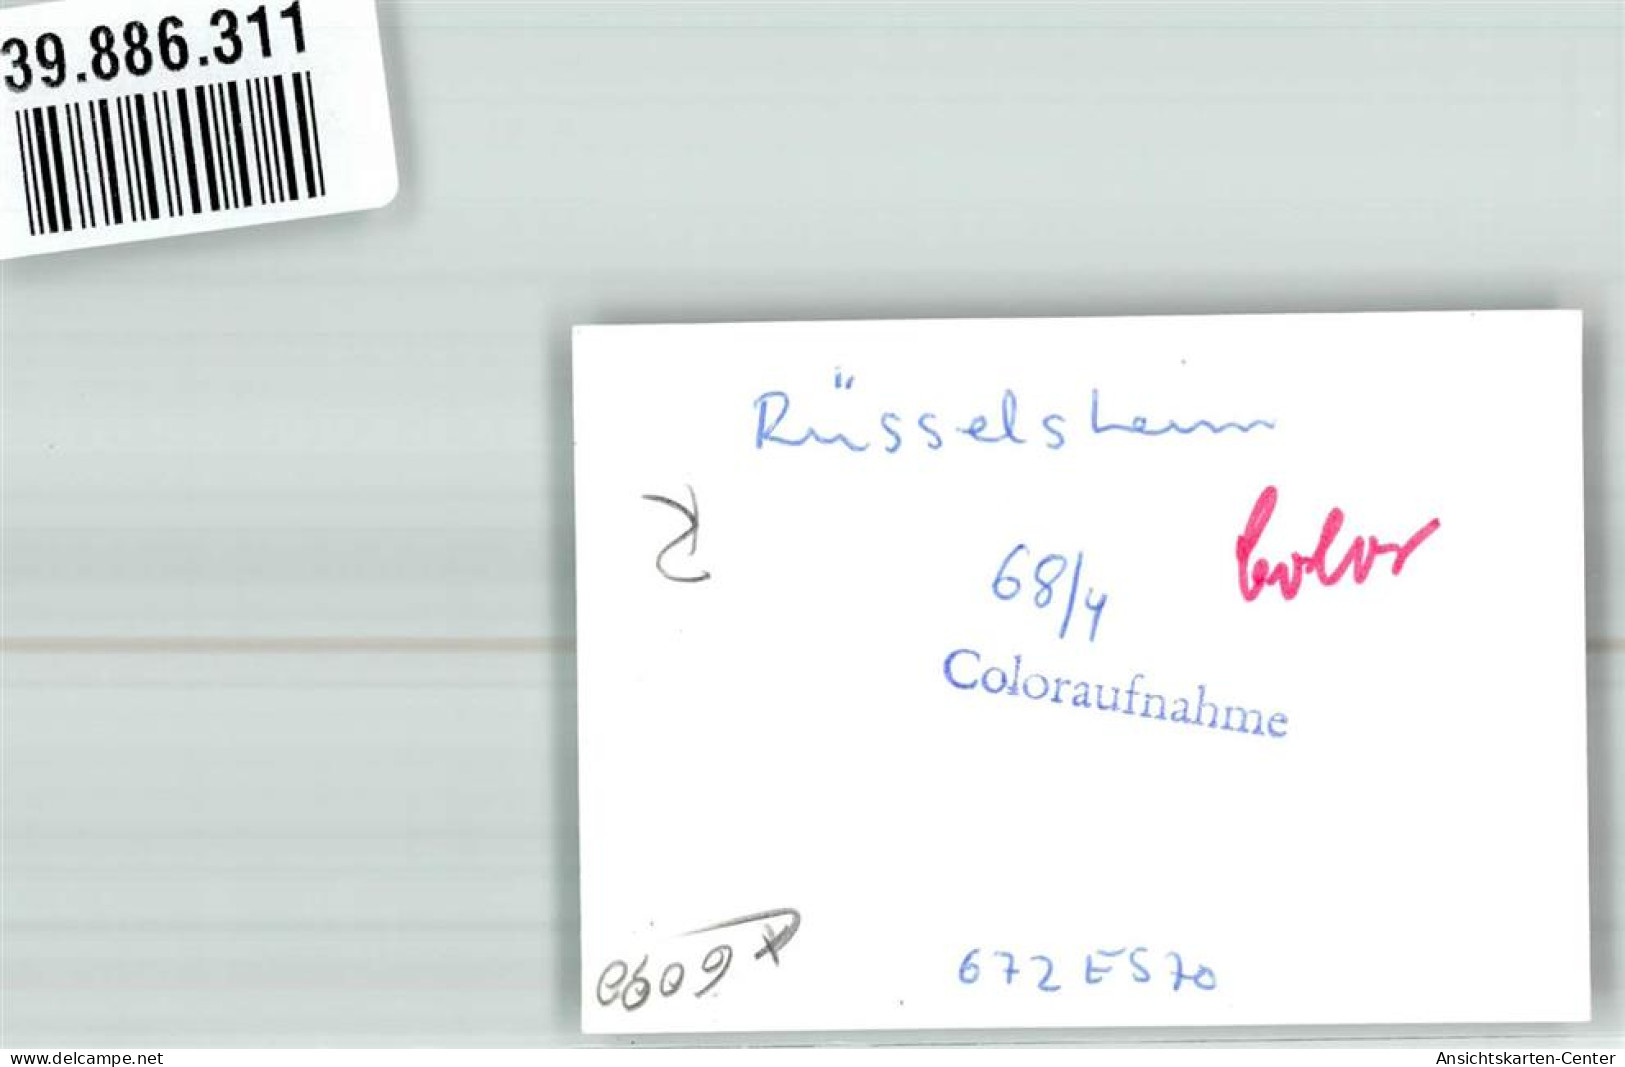 39886311 - Ruesselsheim - Ruesselsheim